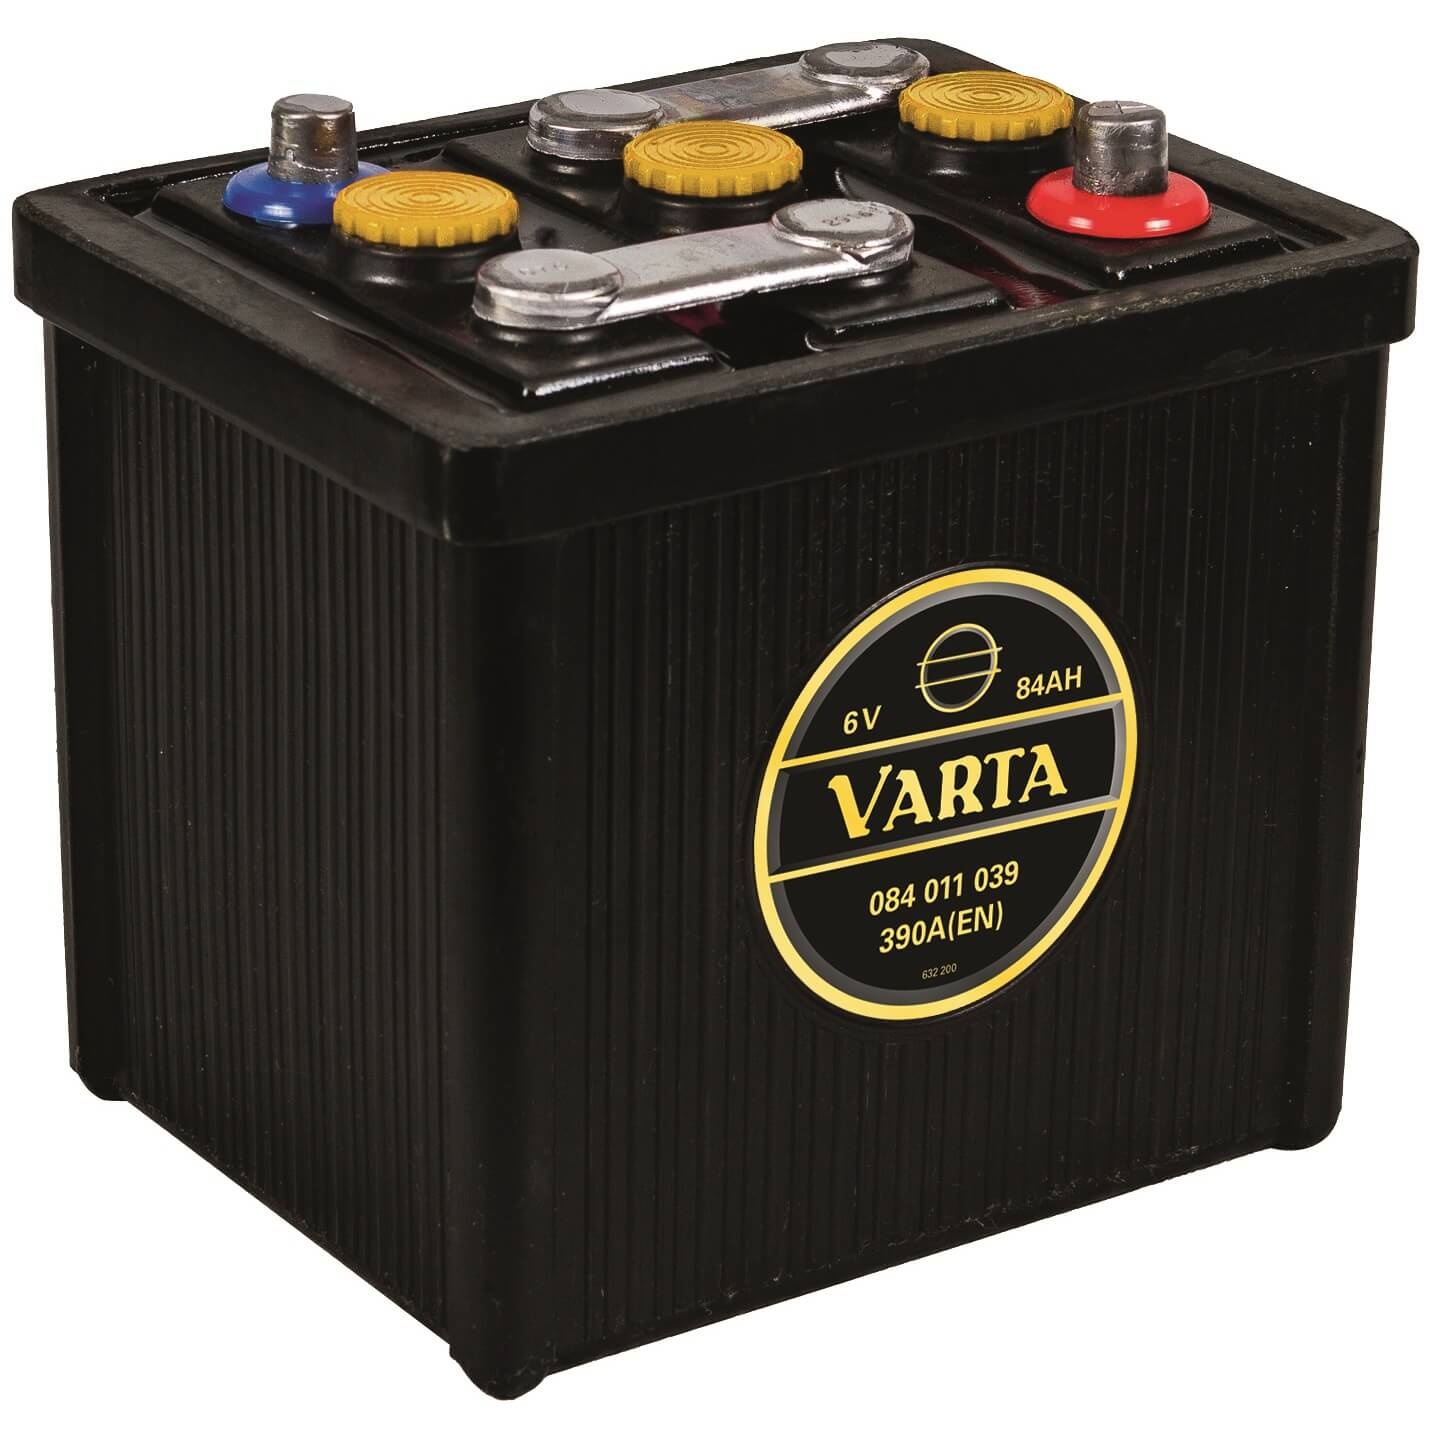 VARTA 084 011 039 Classic 6V Oldtimer-Batterie 84Ah ohne Batteriesäure